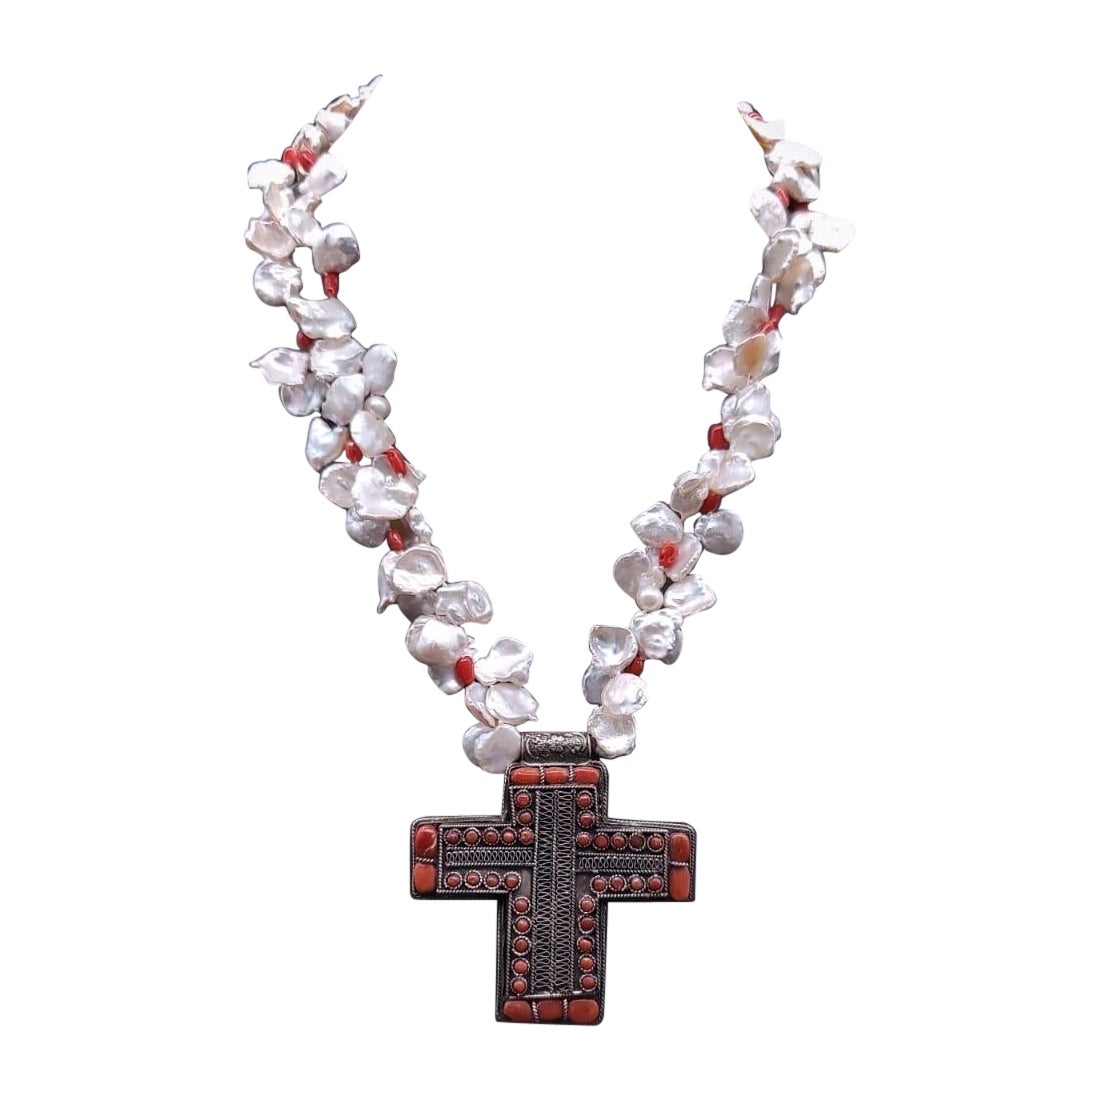 A.Jeschel Atemberaubende Keshi-Perlenkette mit silbernem Kreuz-Anhänger.